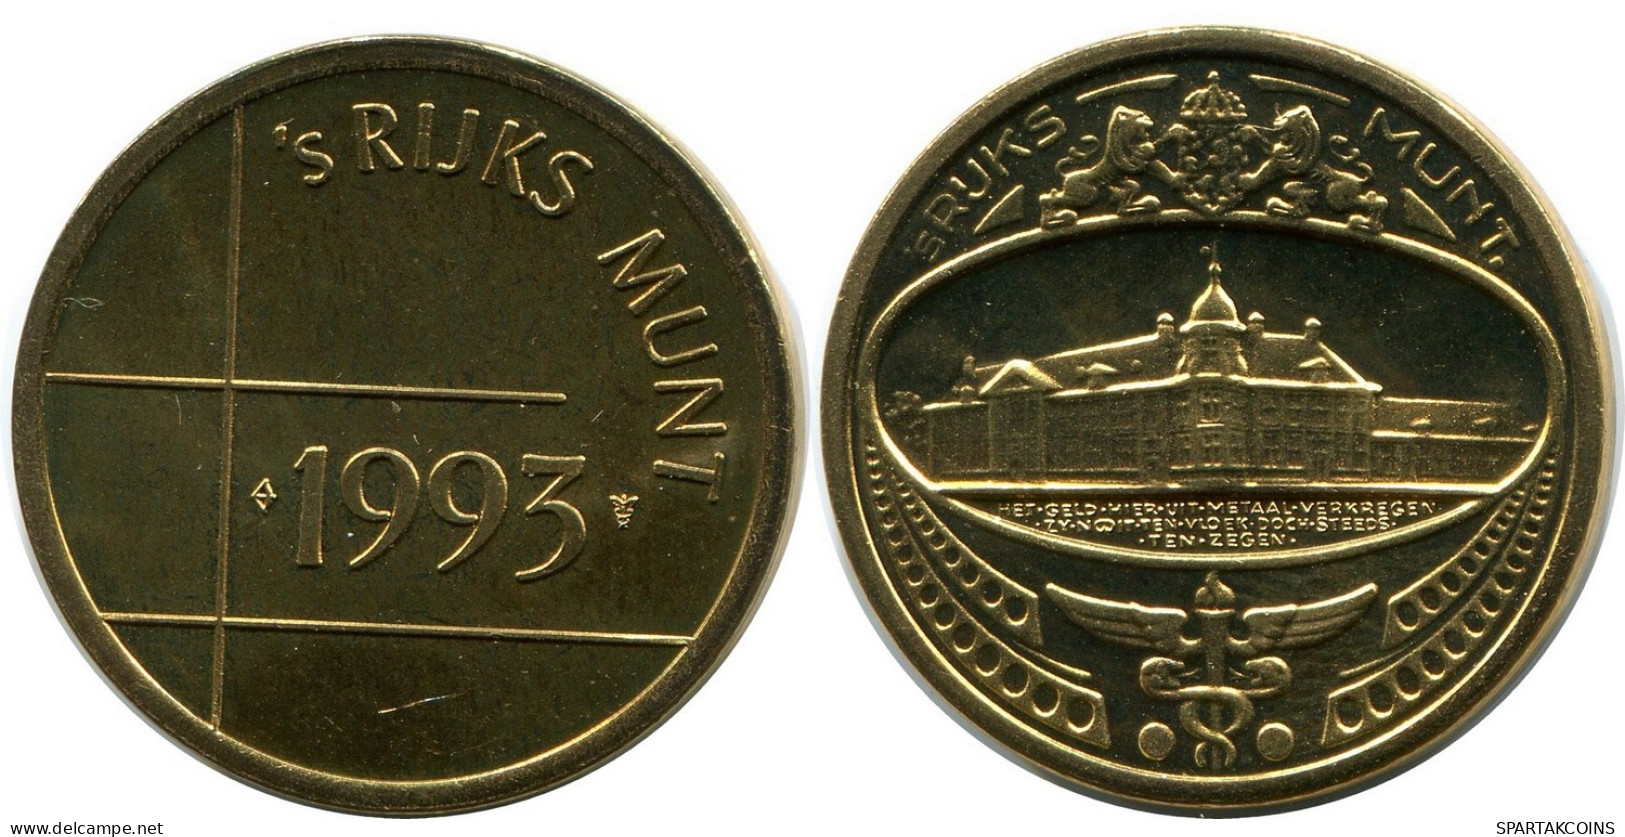 1993 ROYAL DUTCH MINT SET TOKEN NÉERLANDAIS NETHERLANDS MINT (From BU Mint Set) #AH032.F - Mint Sets & Proof Sets